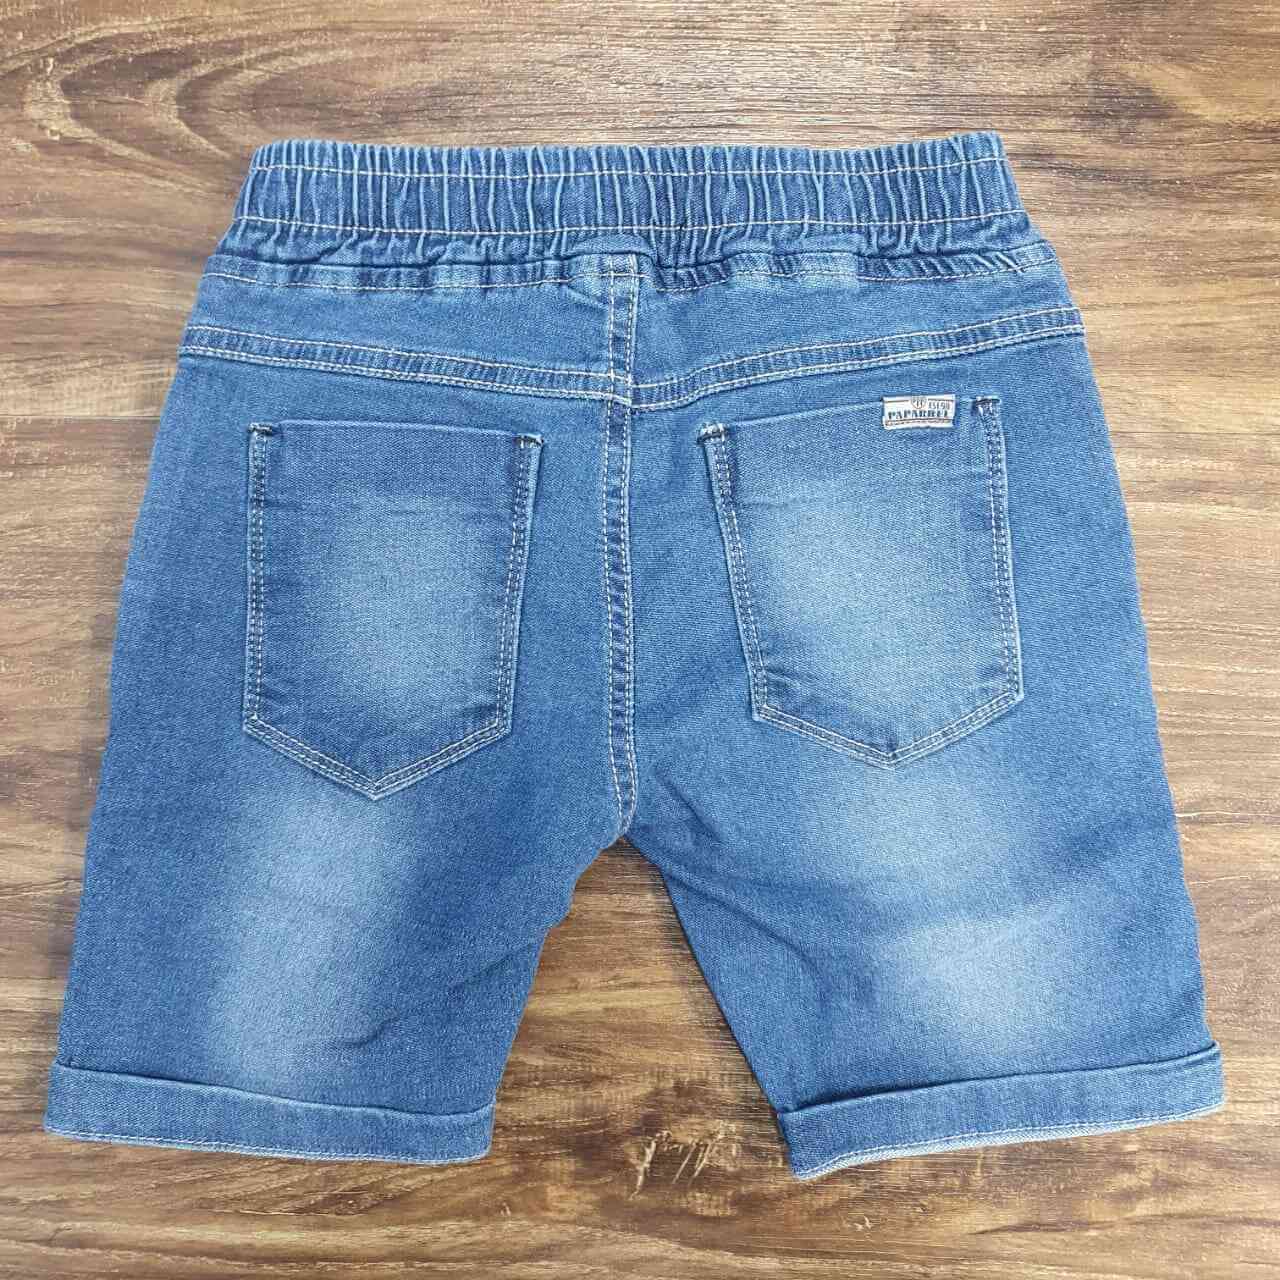 Bermuda Jeans Infantil